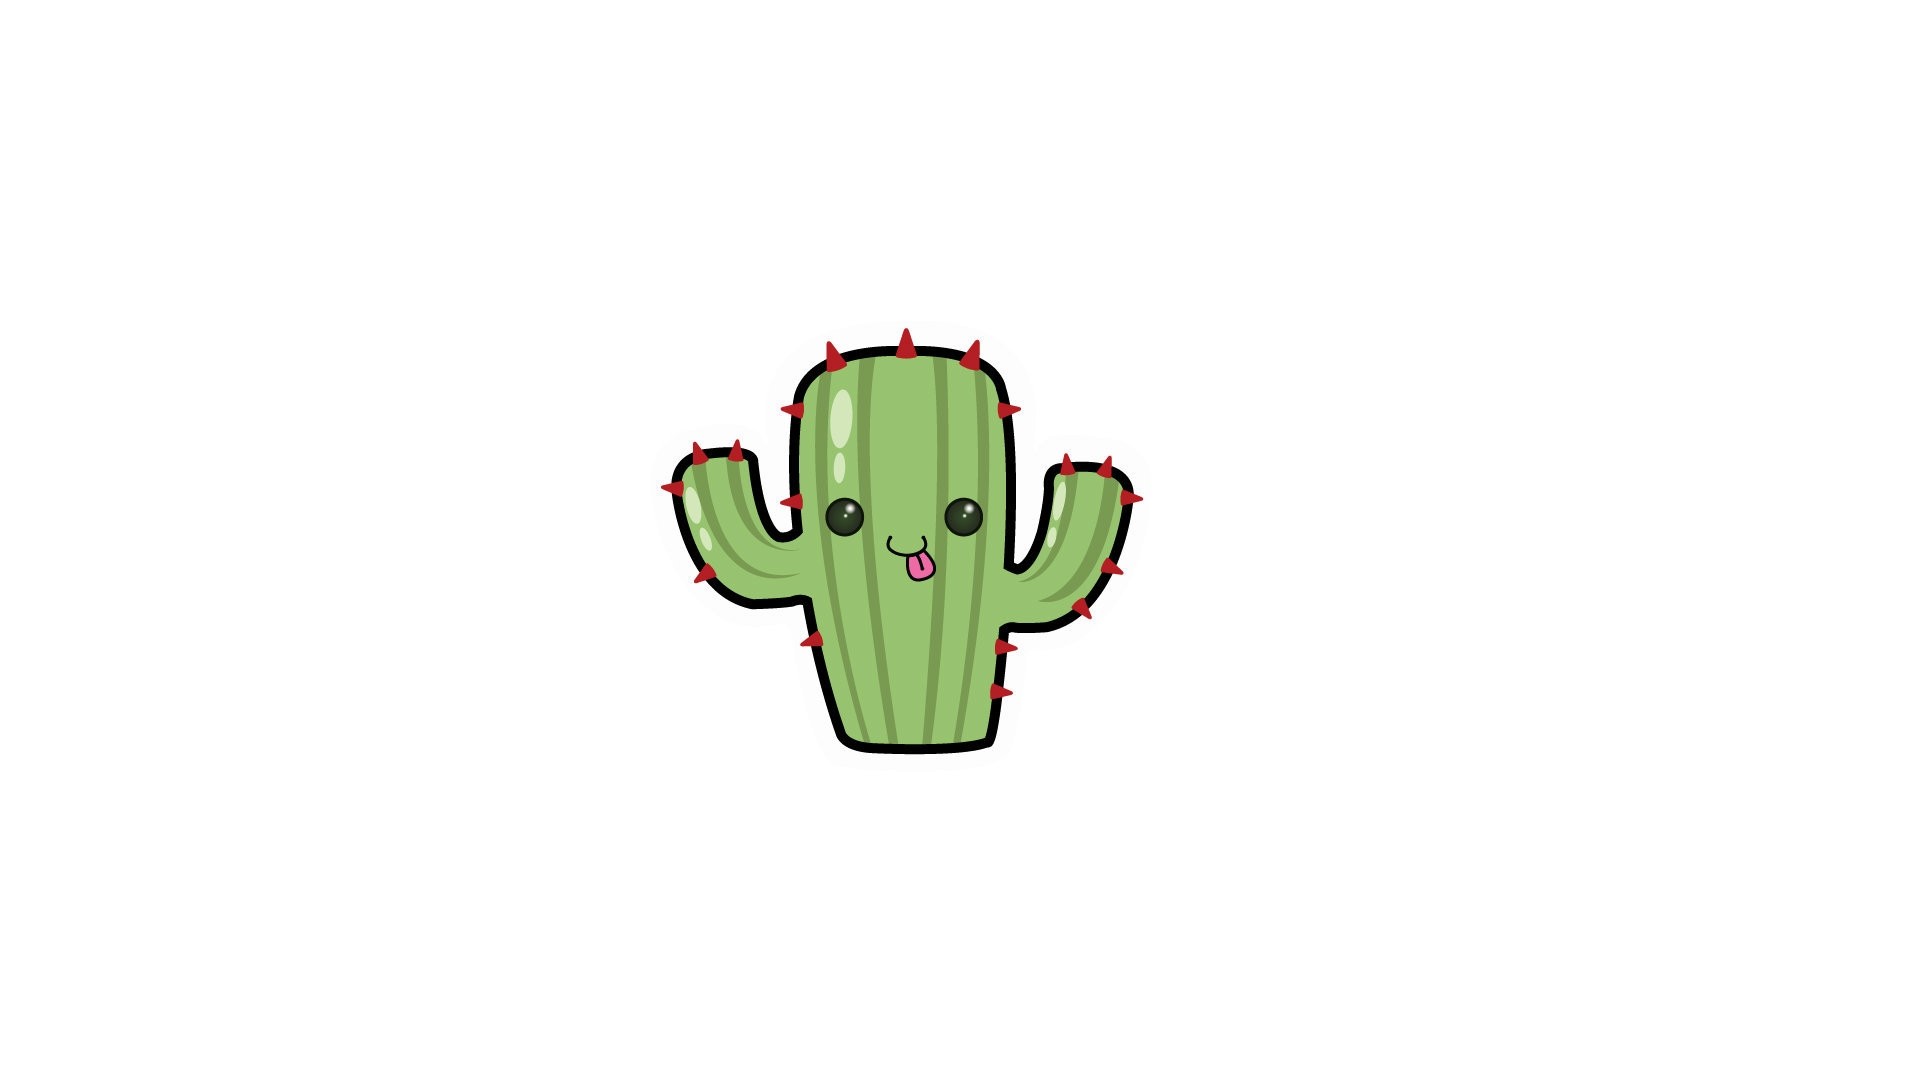 Cactus Minimalist Image